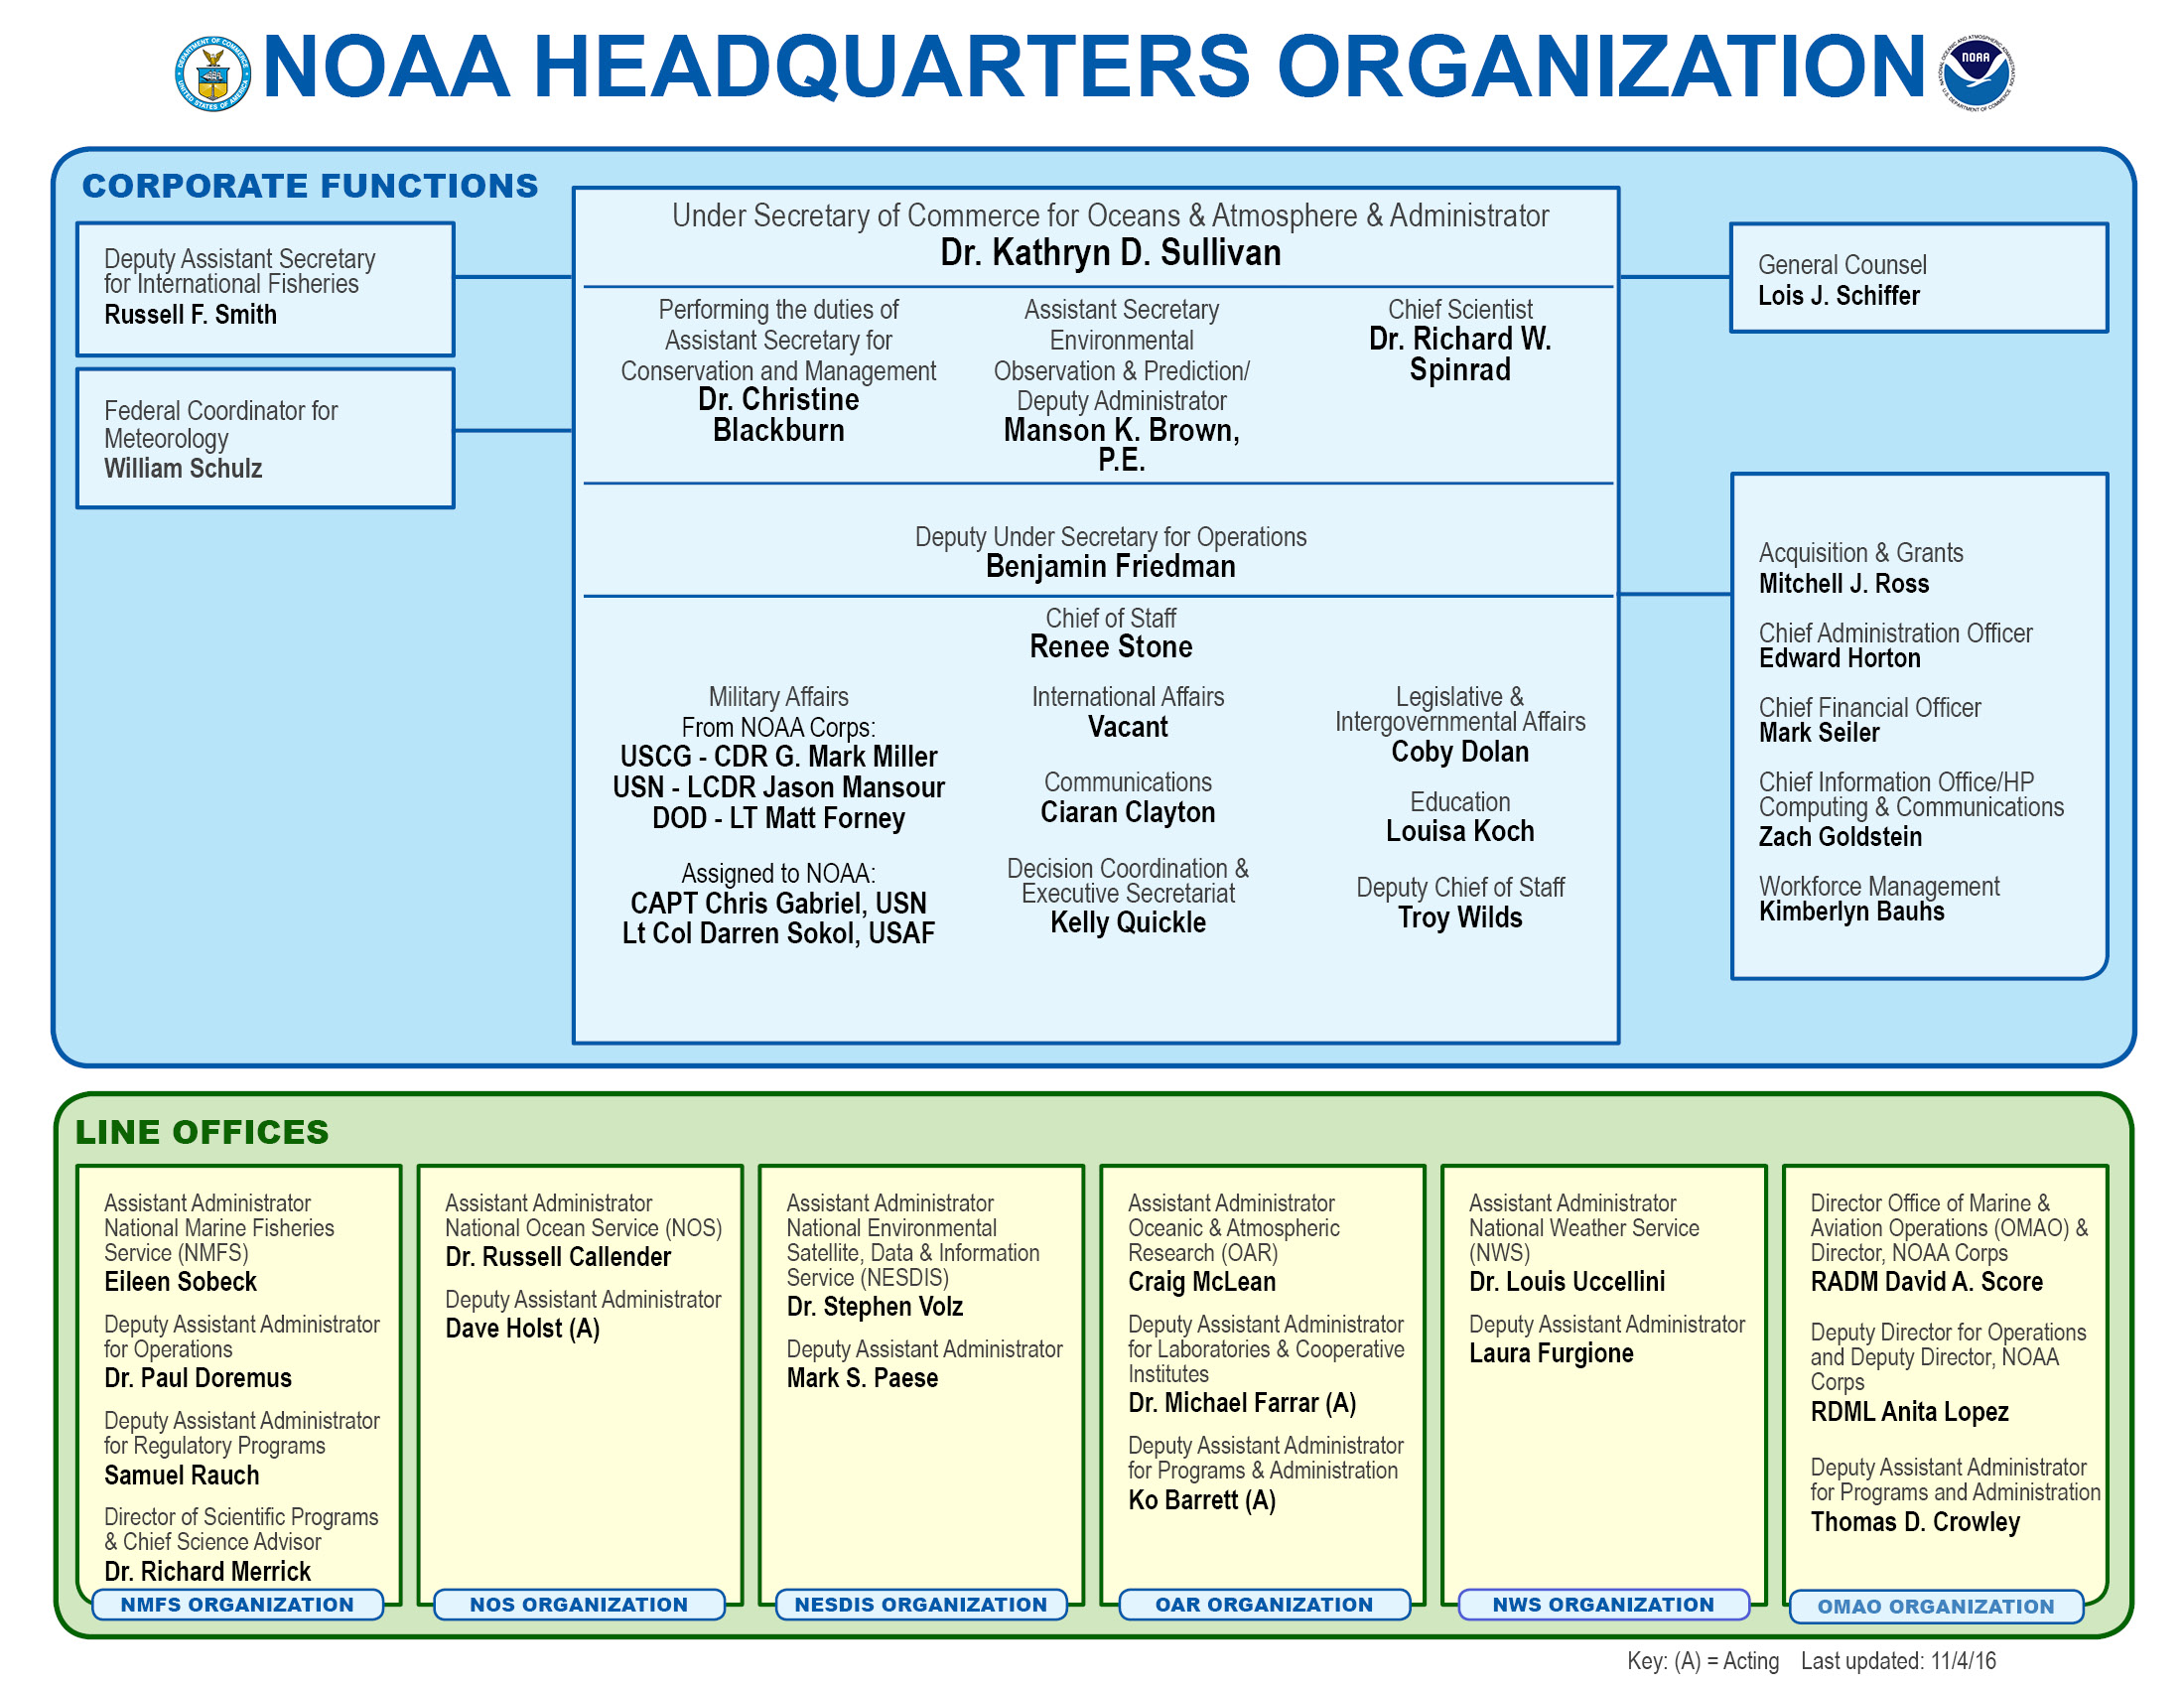 NOAA Organizational Chart as of August 29, 2016. 